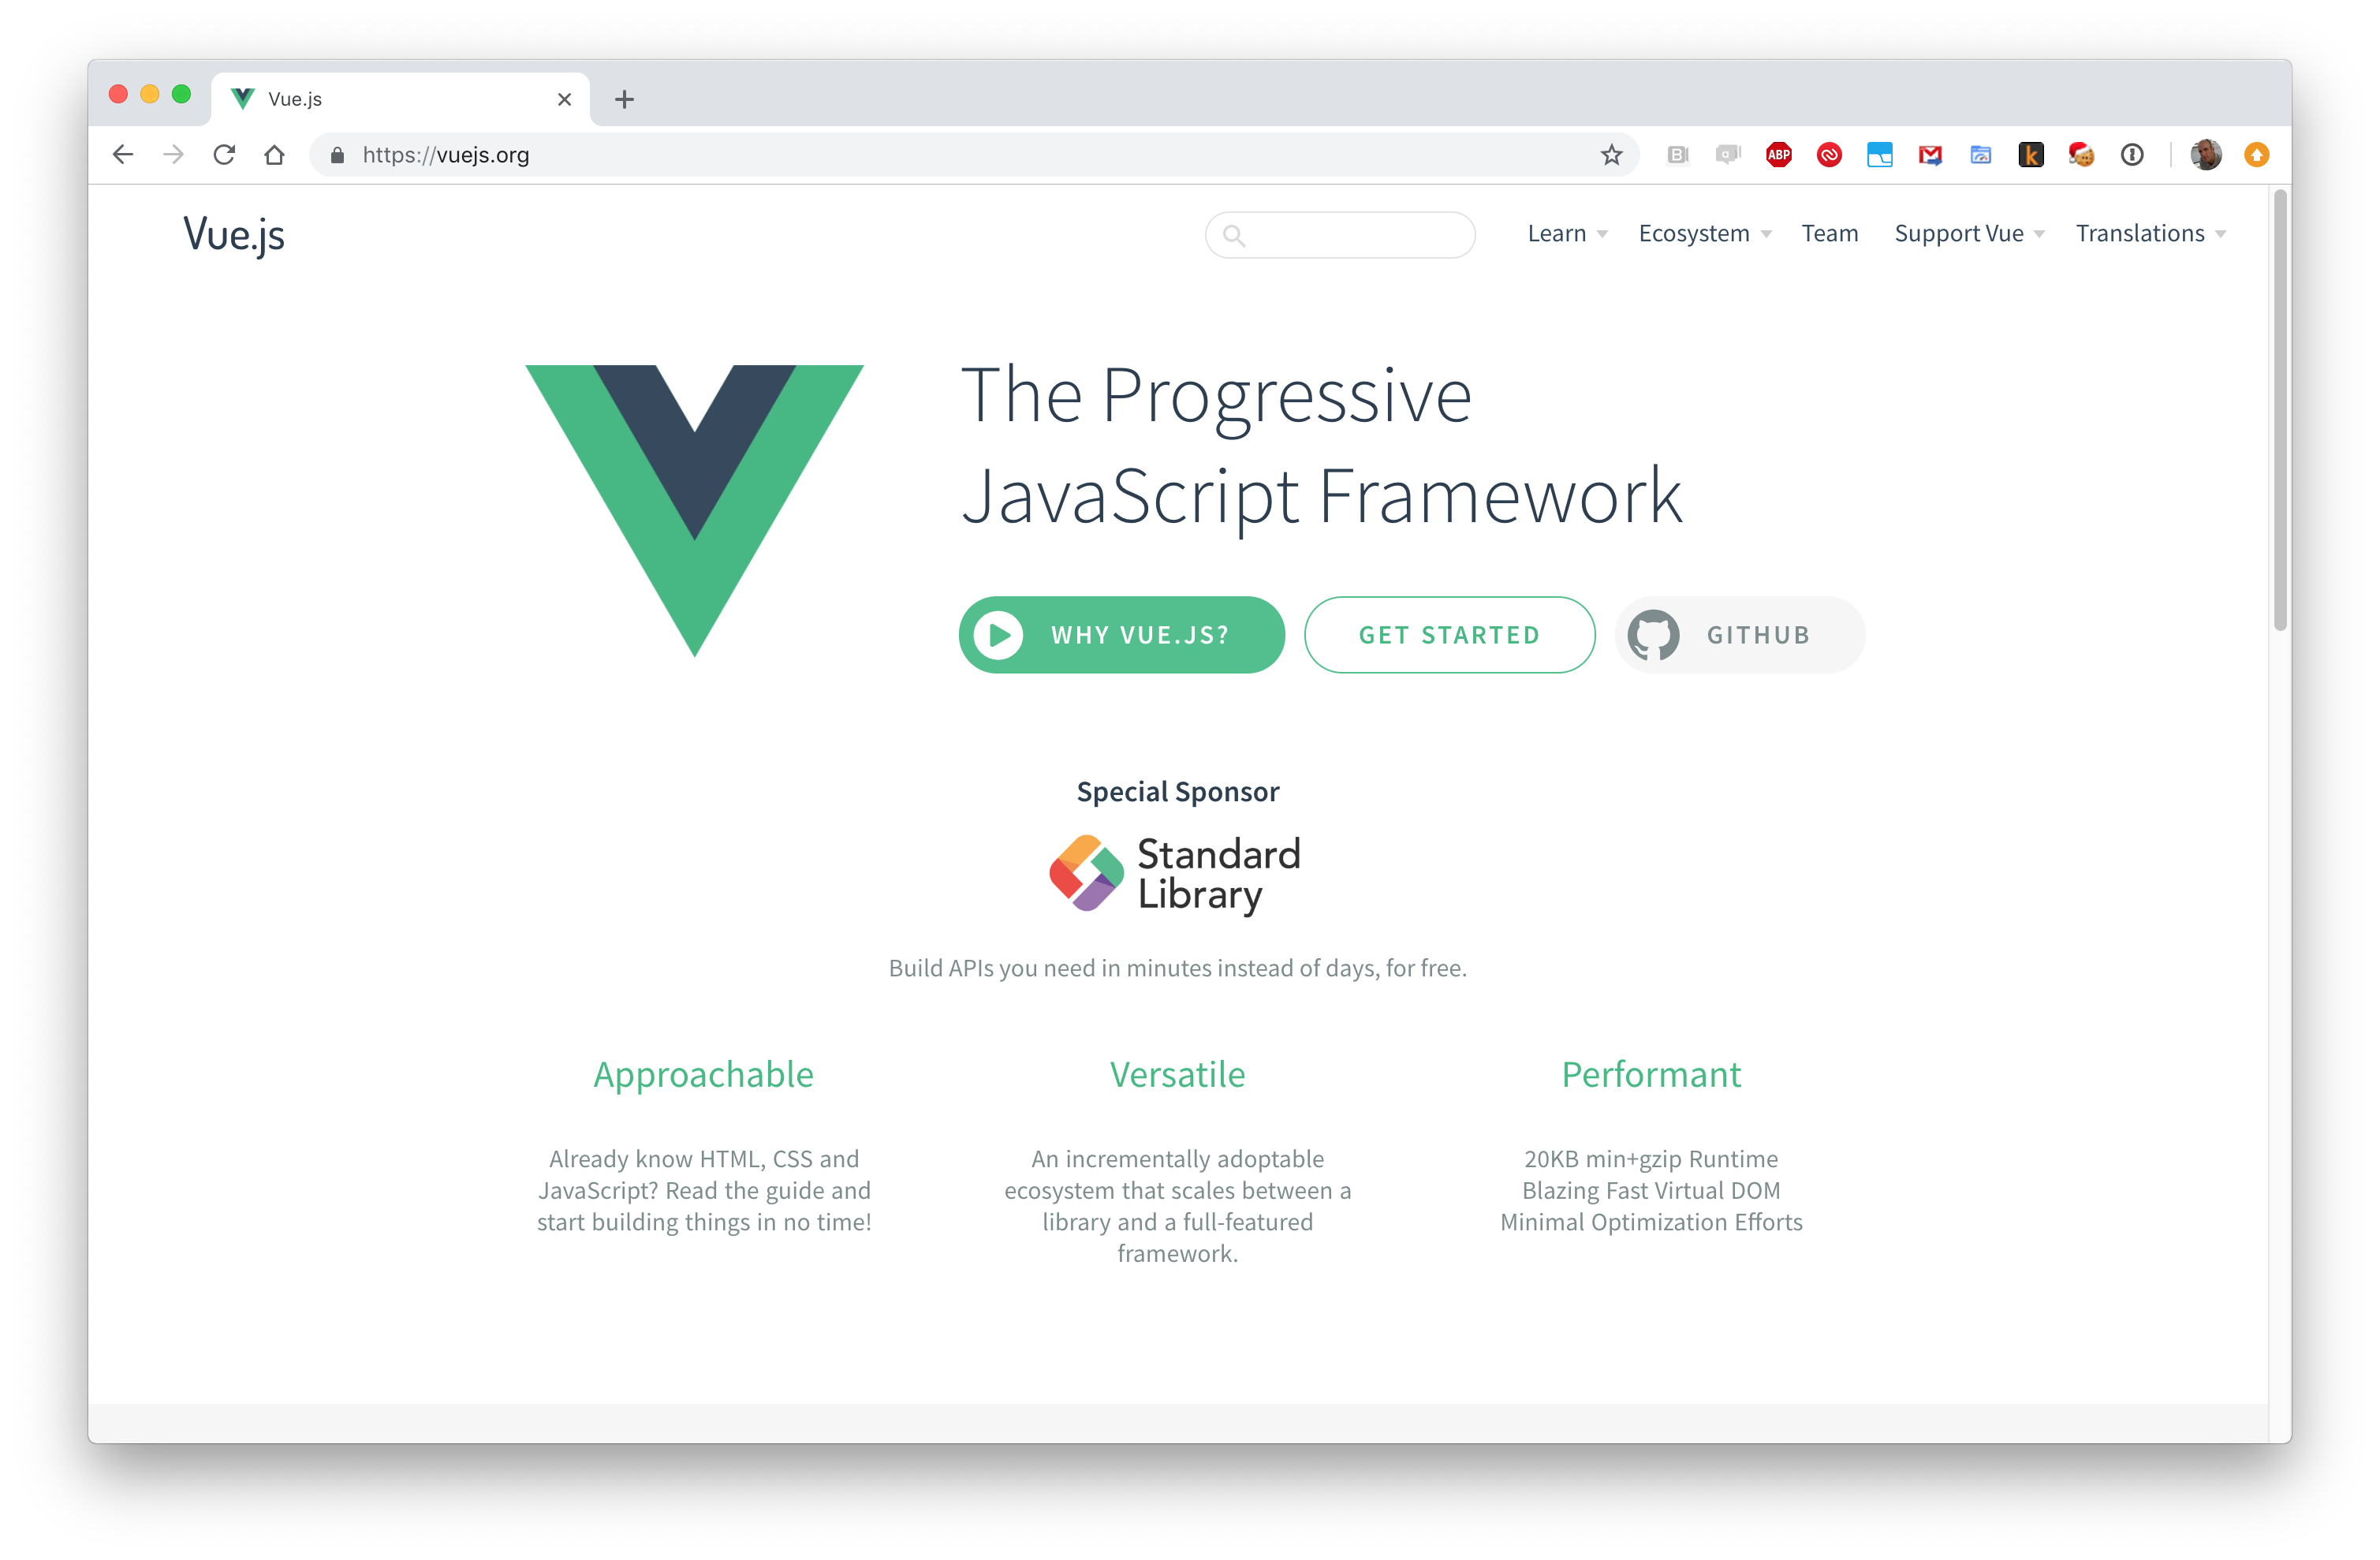 Vue is a Progressive JavaScript Framework